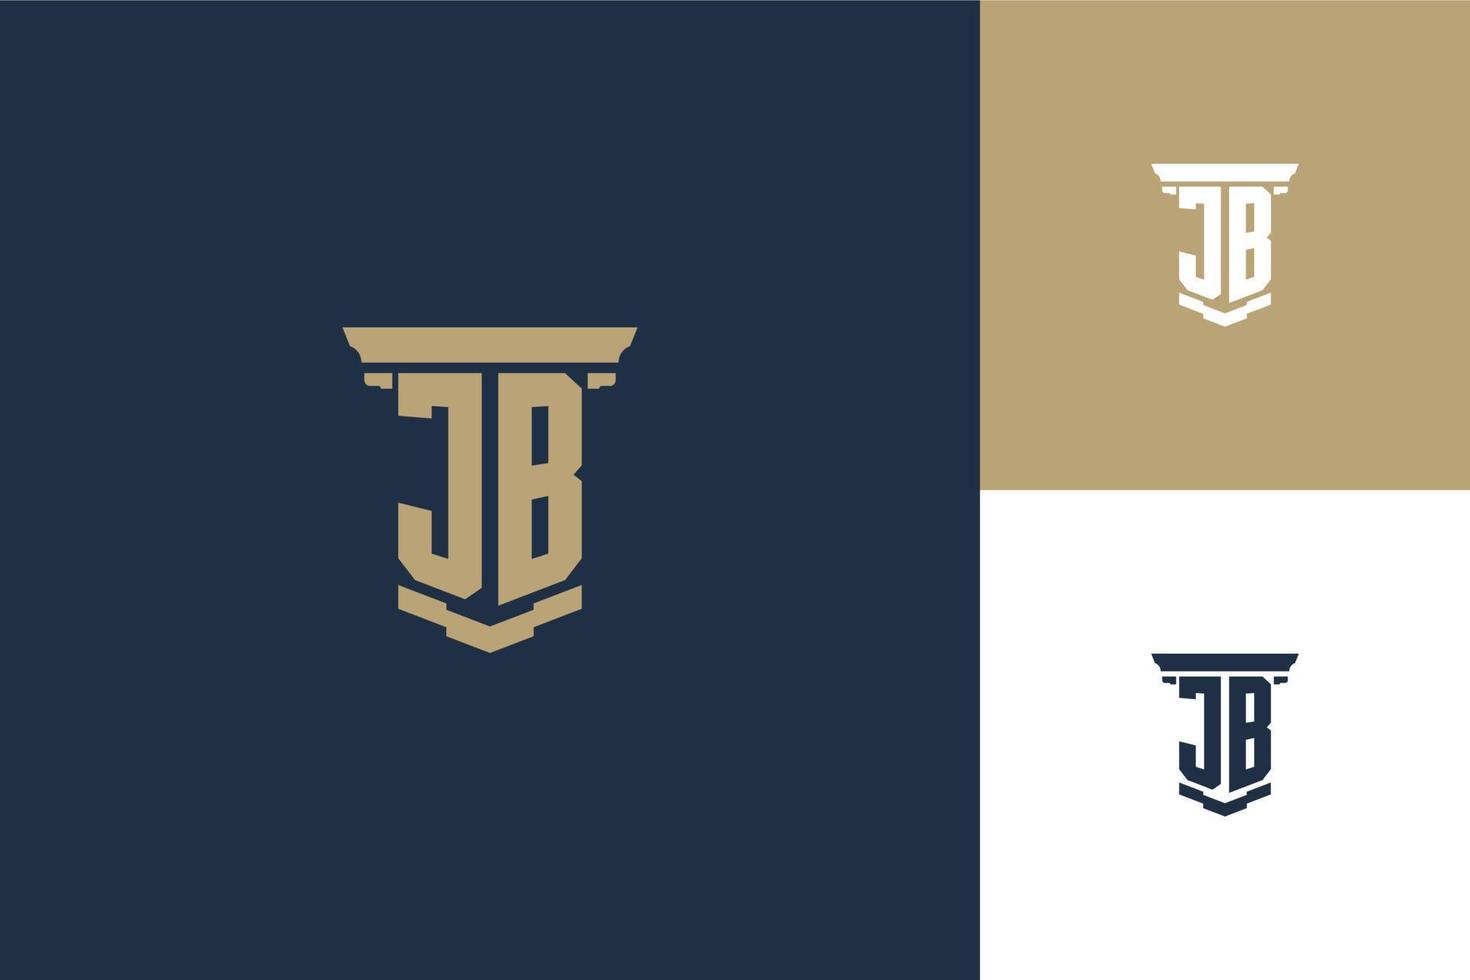 JB monogram initials logo design with pillar icon. Attorney law logo design vector